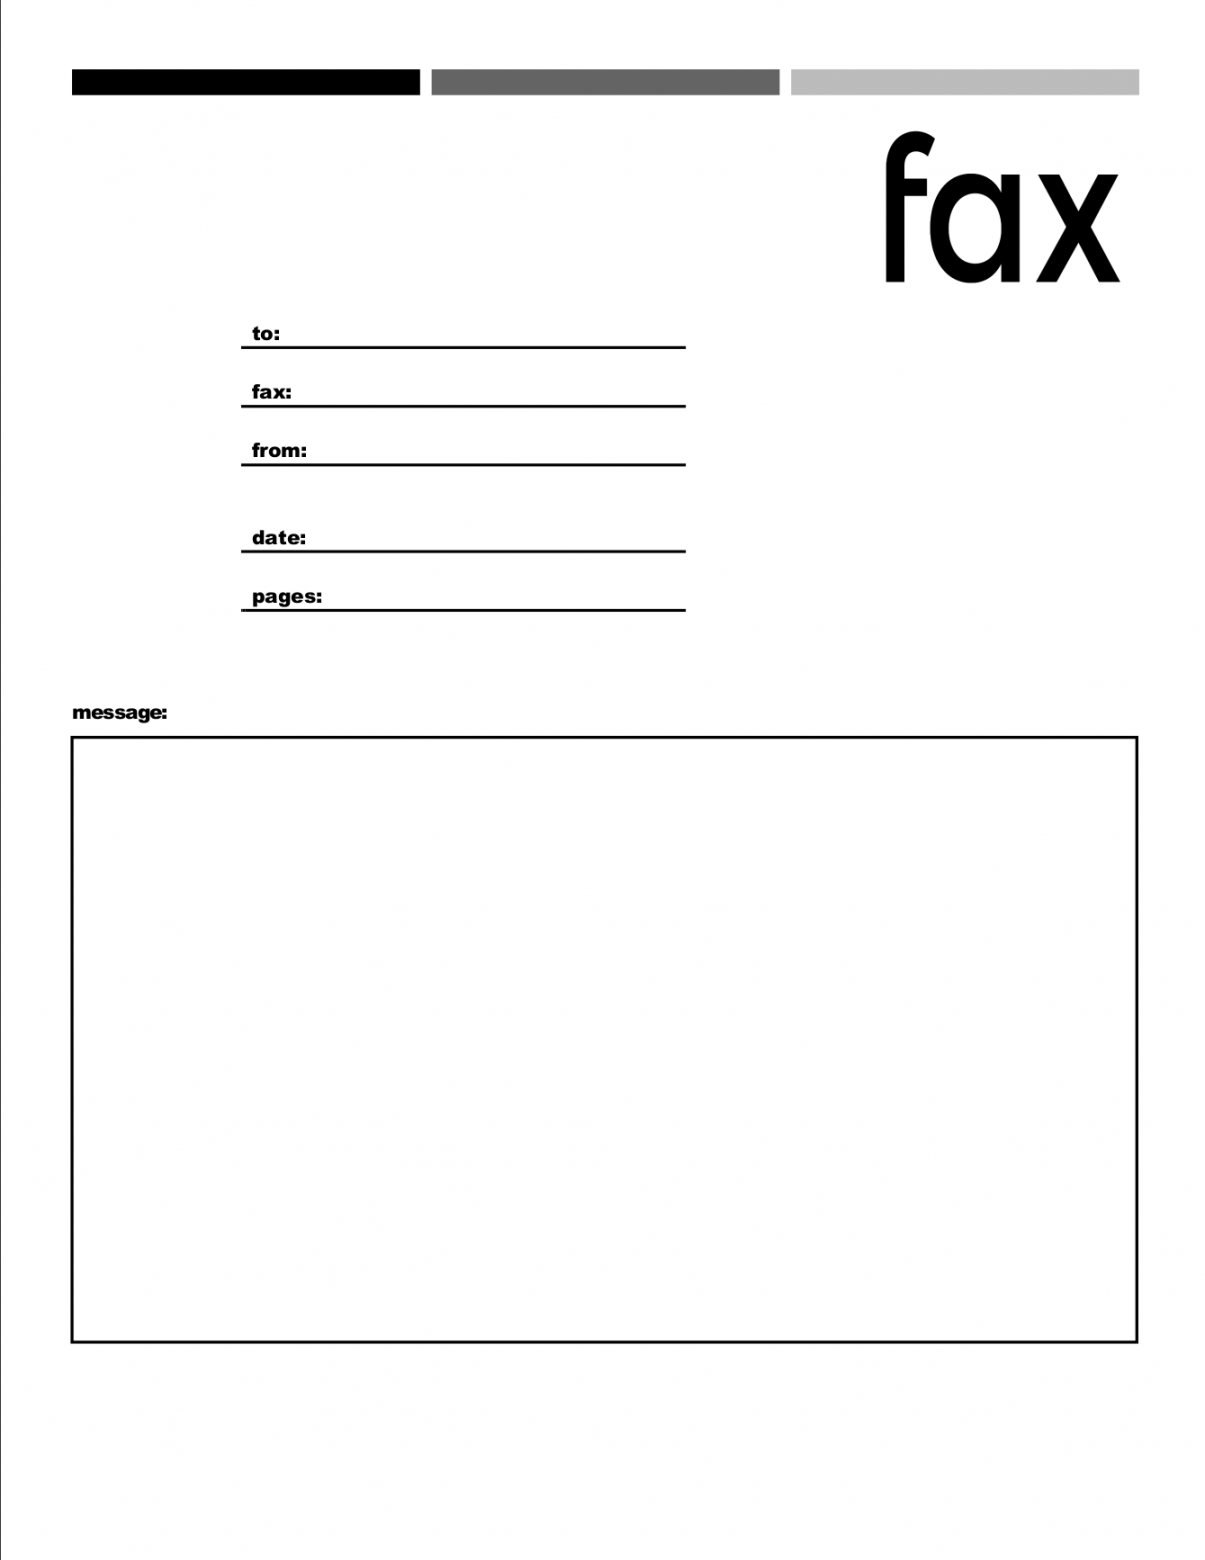 Fax Cover Sheet Free Printable - Printable - Free Fax Cover Sheets  FaxBurner